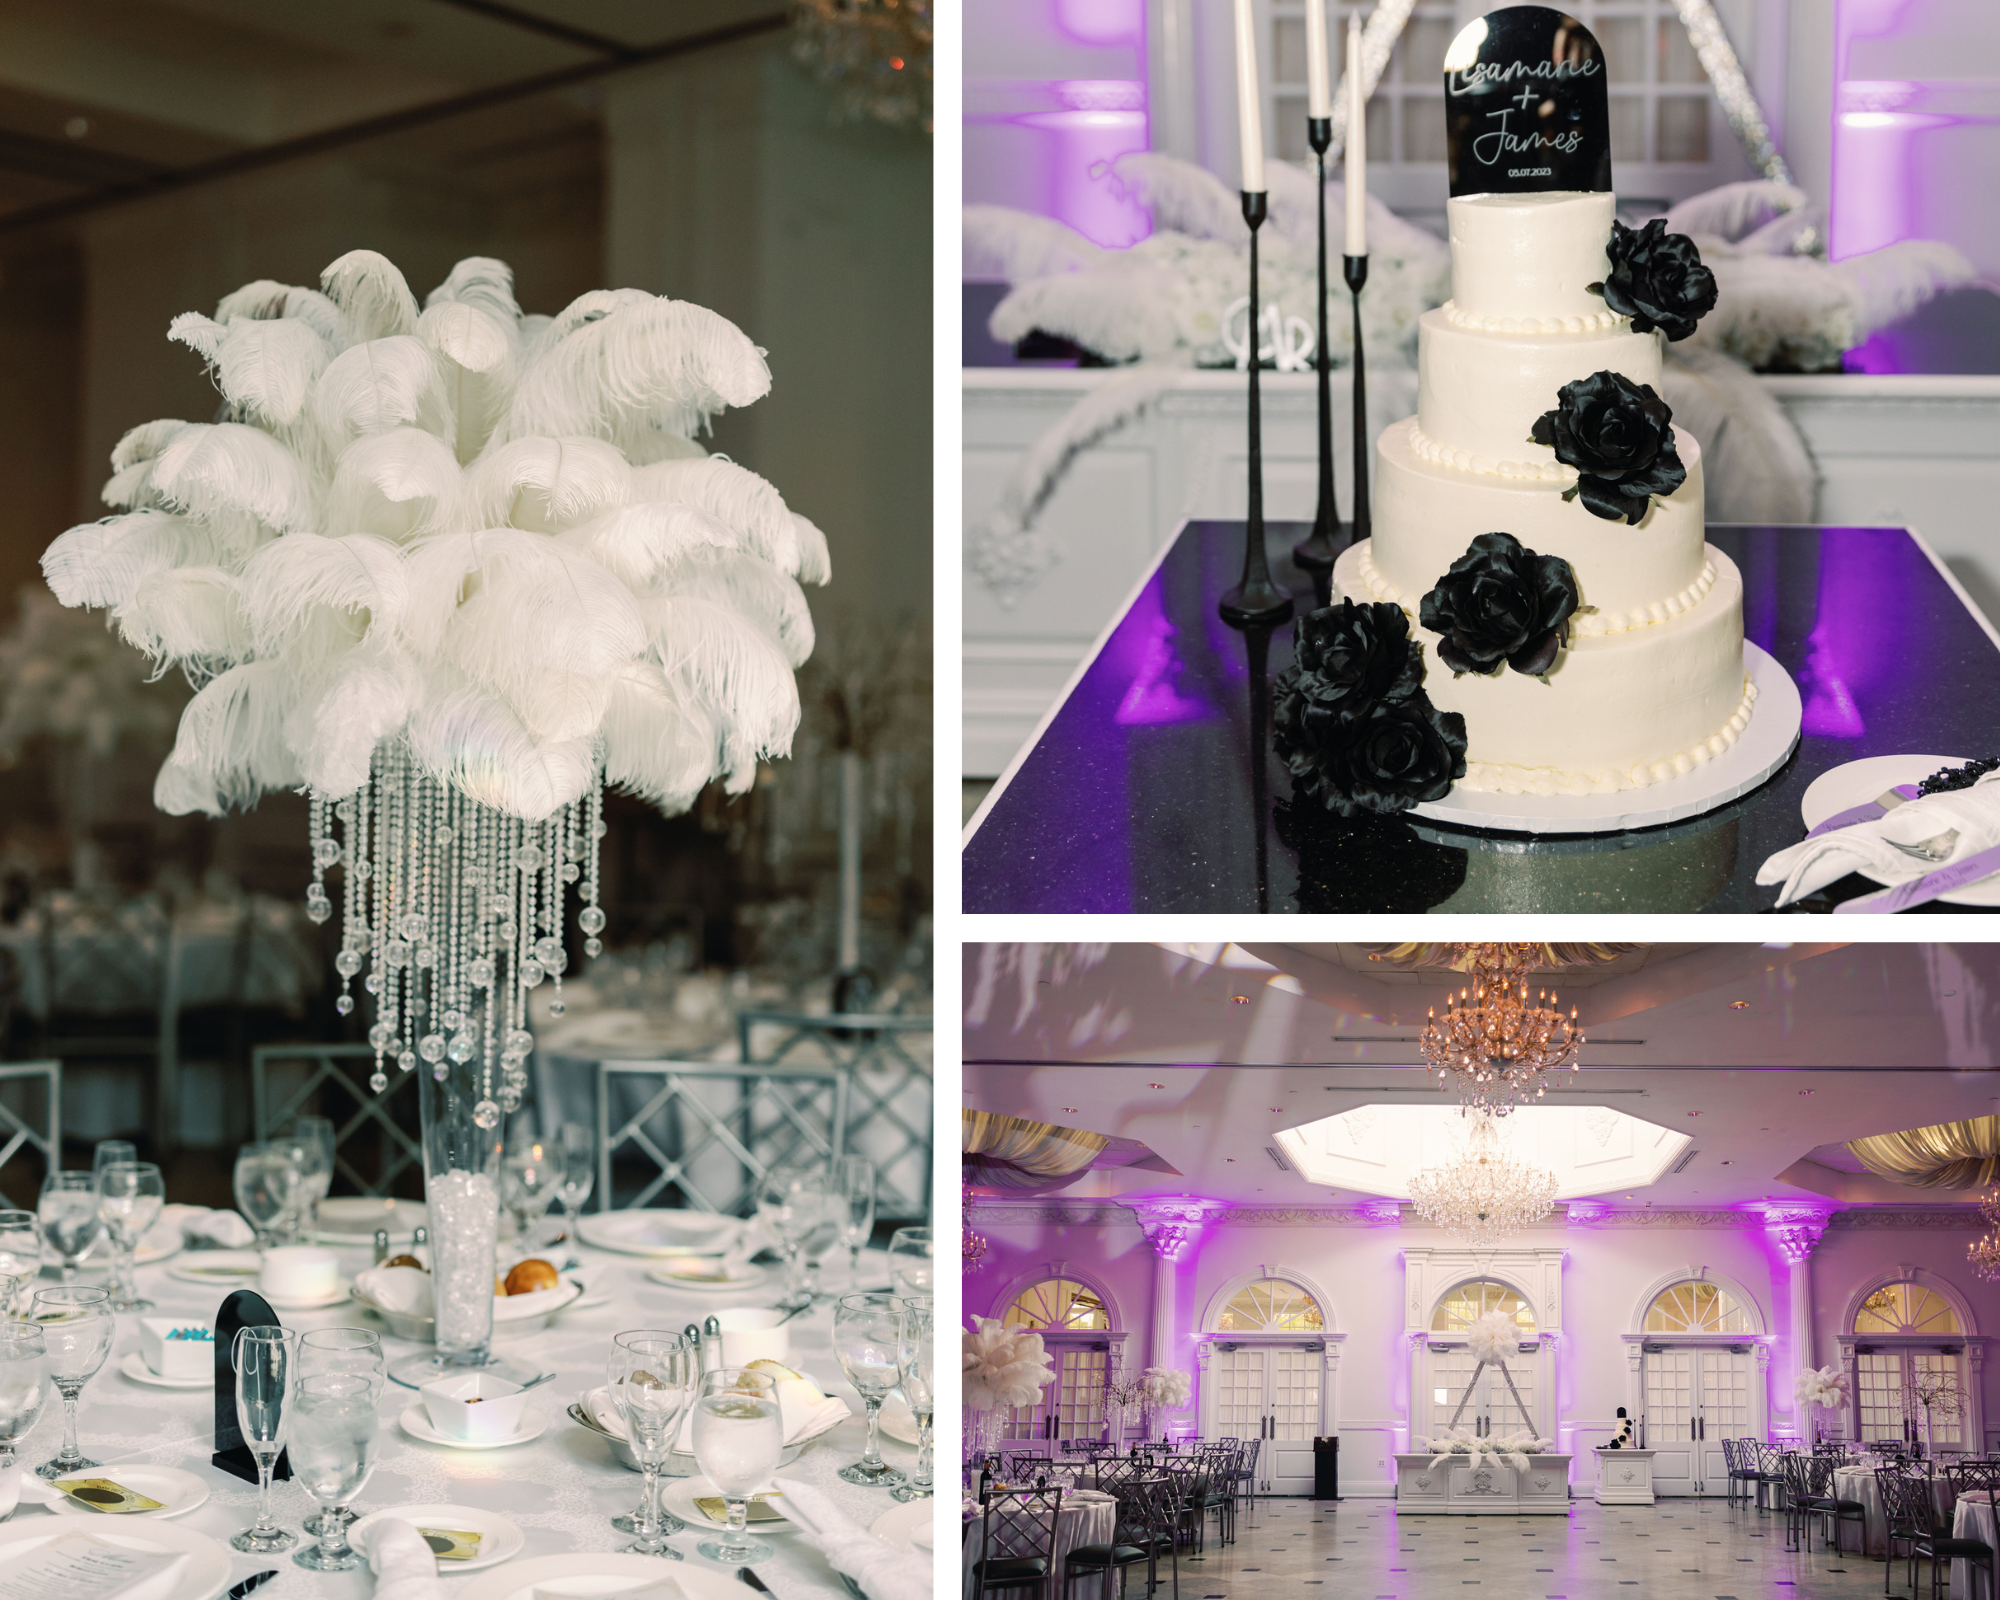 Purple, black and white Great Gatsby-inspired wedding reception decor.